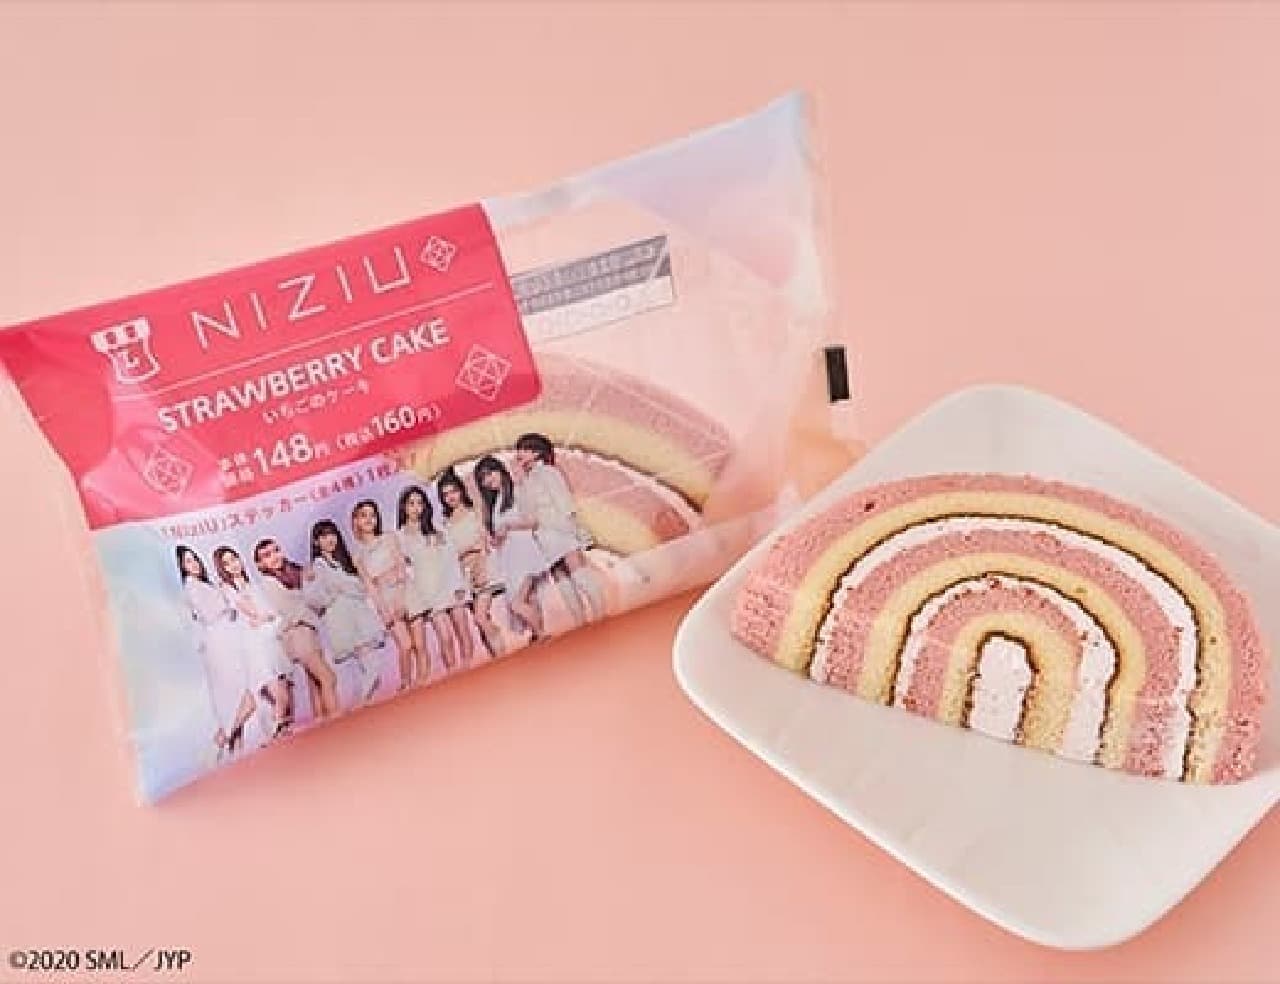 Lawson "NiziU Strawberry Cake"